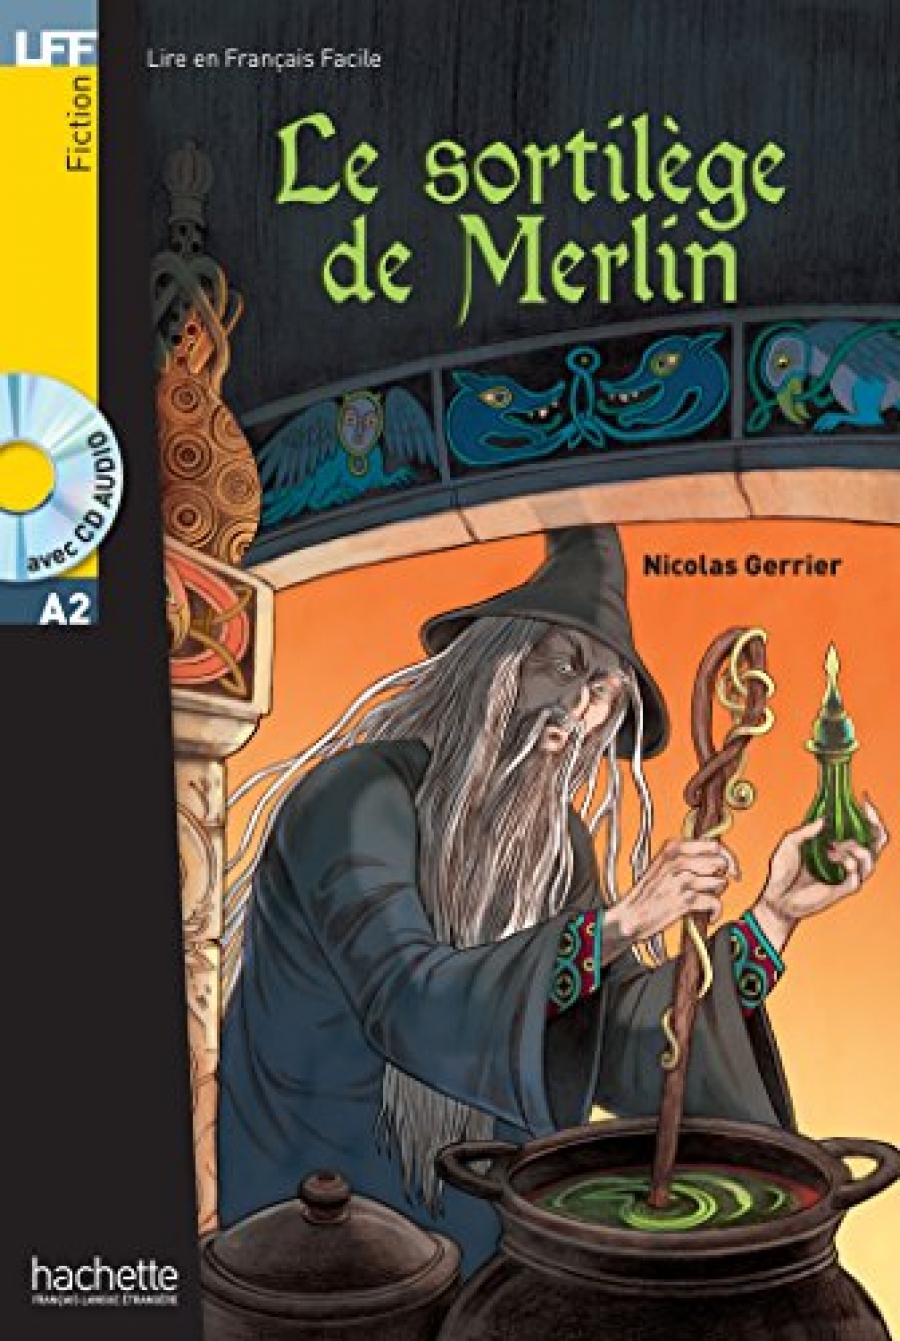 N., Gerrier Le sortilege de Merlin + CD, A2 